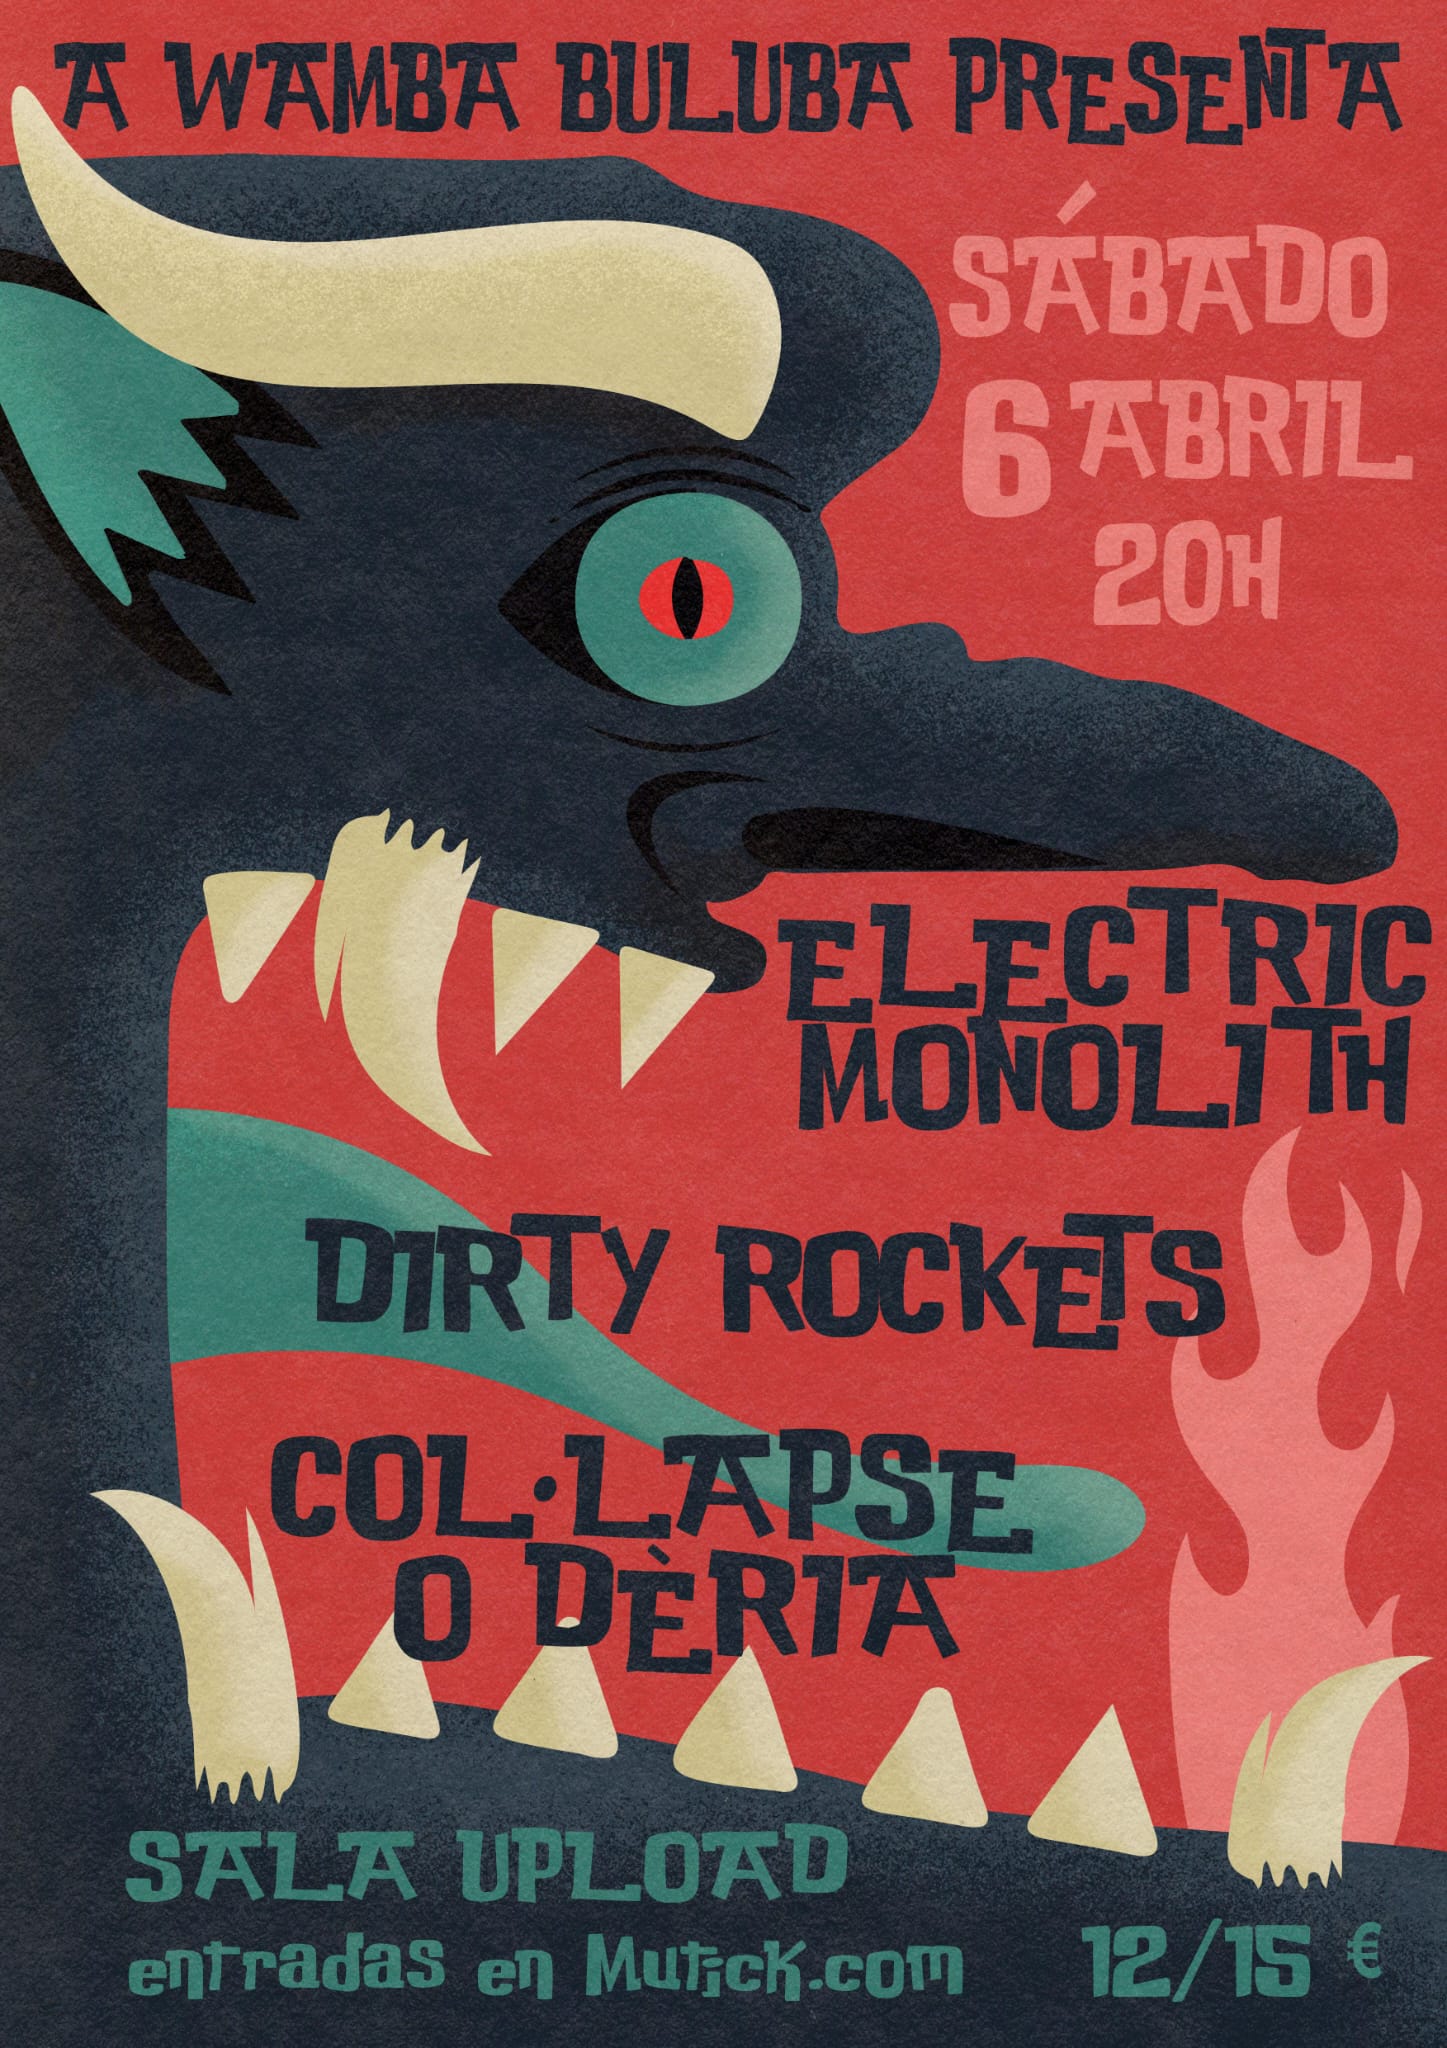 ELECTRIC MONOLITH + Dirty Rockets + Col.lapse o Deria en Barcelona - Mutick